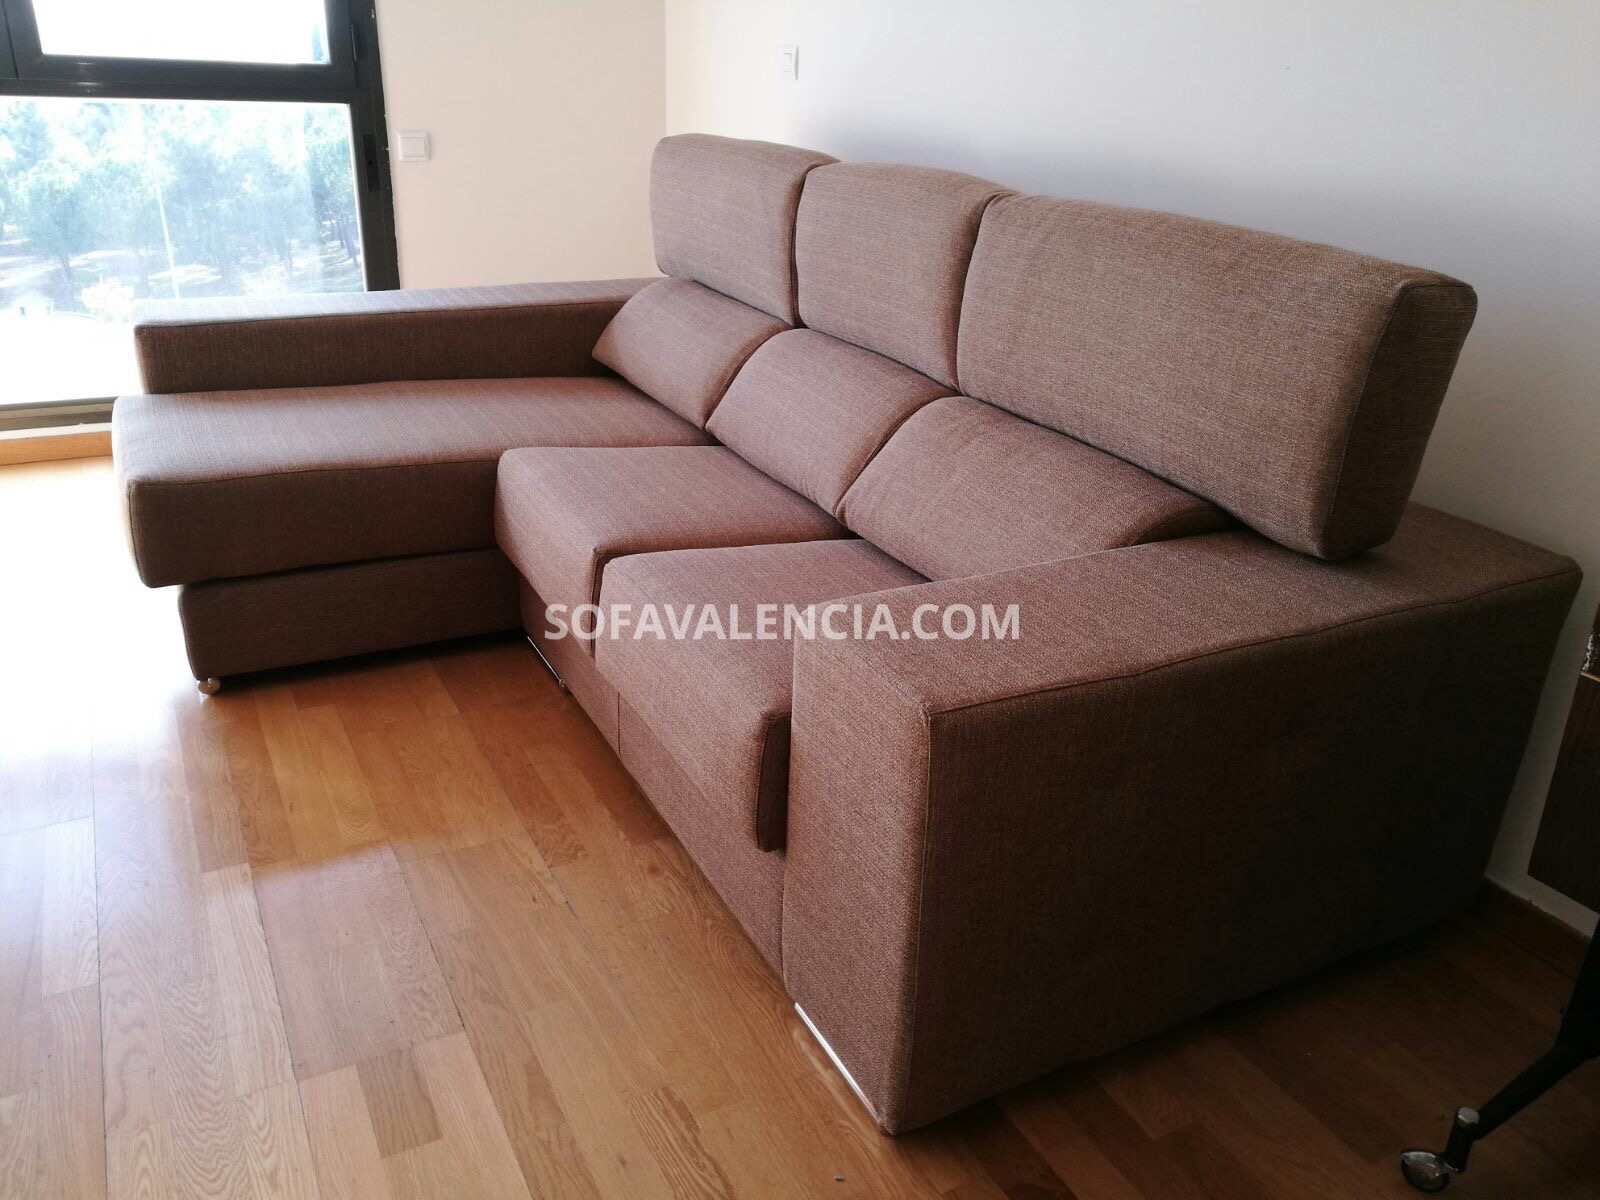 sofa-valencia-fotos-clientes-25